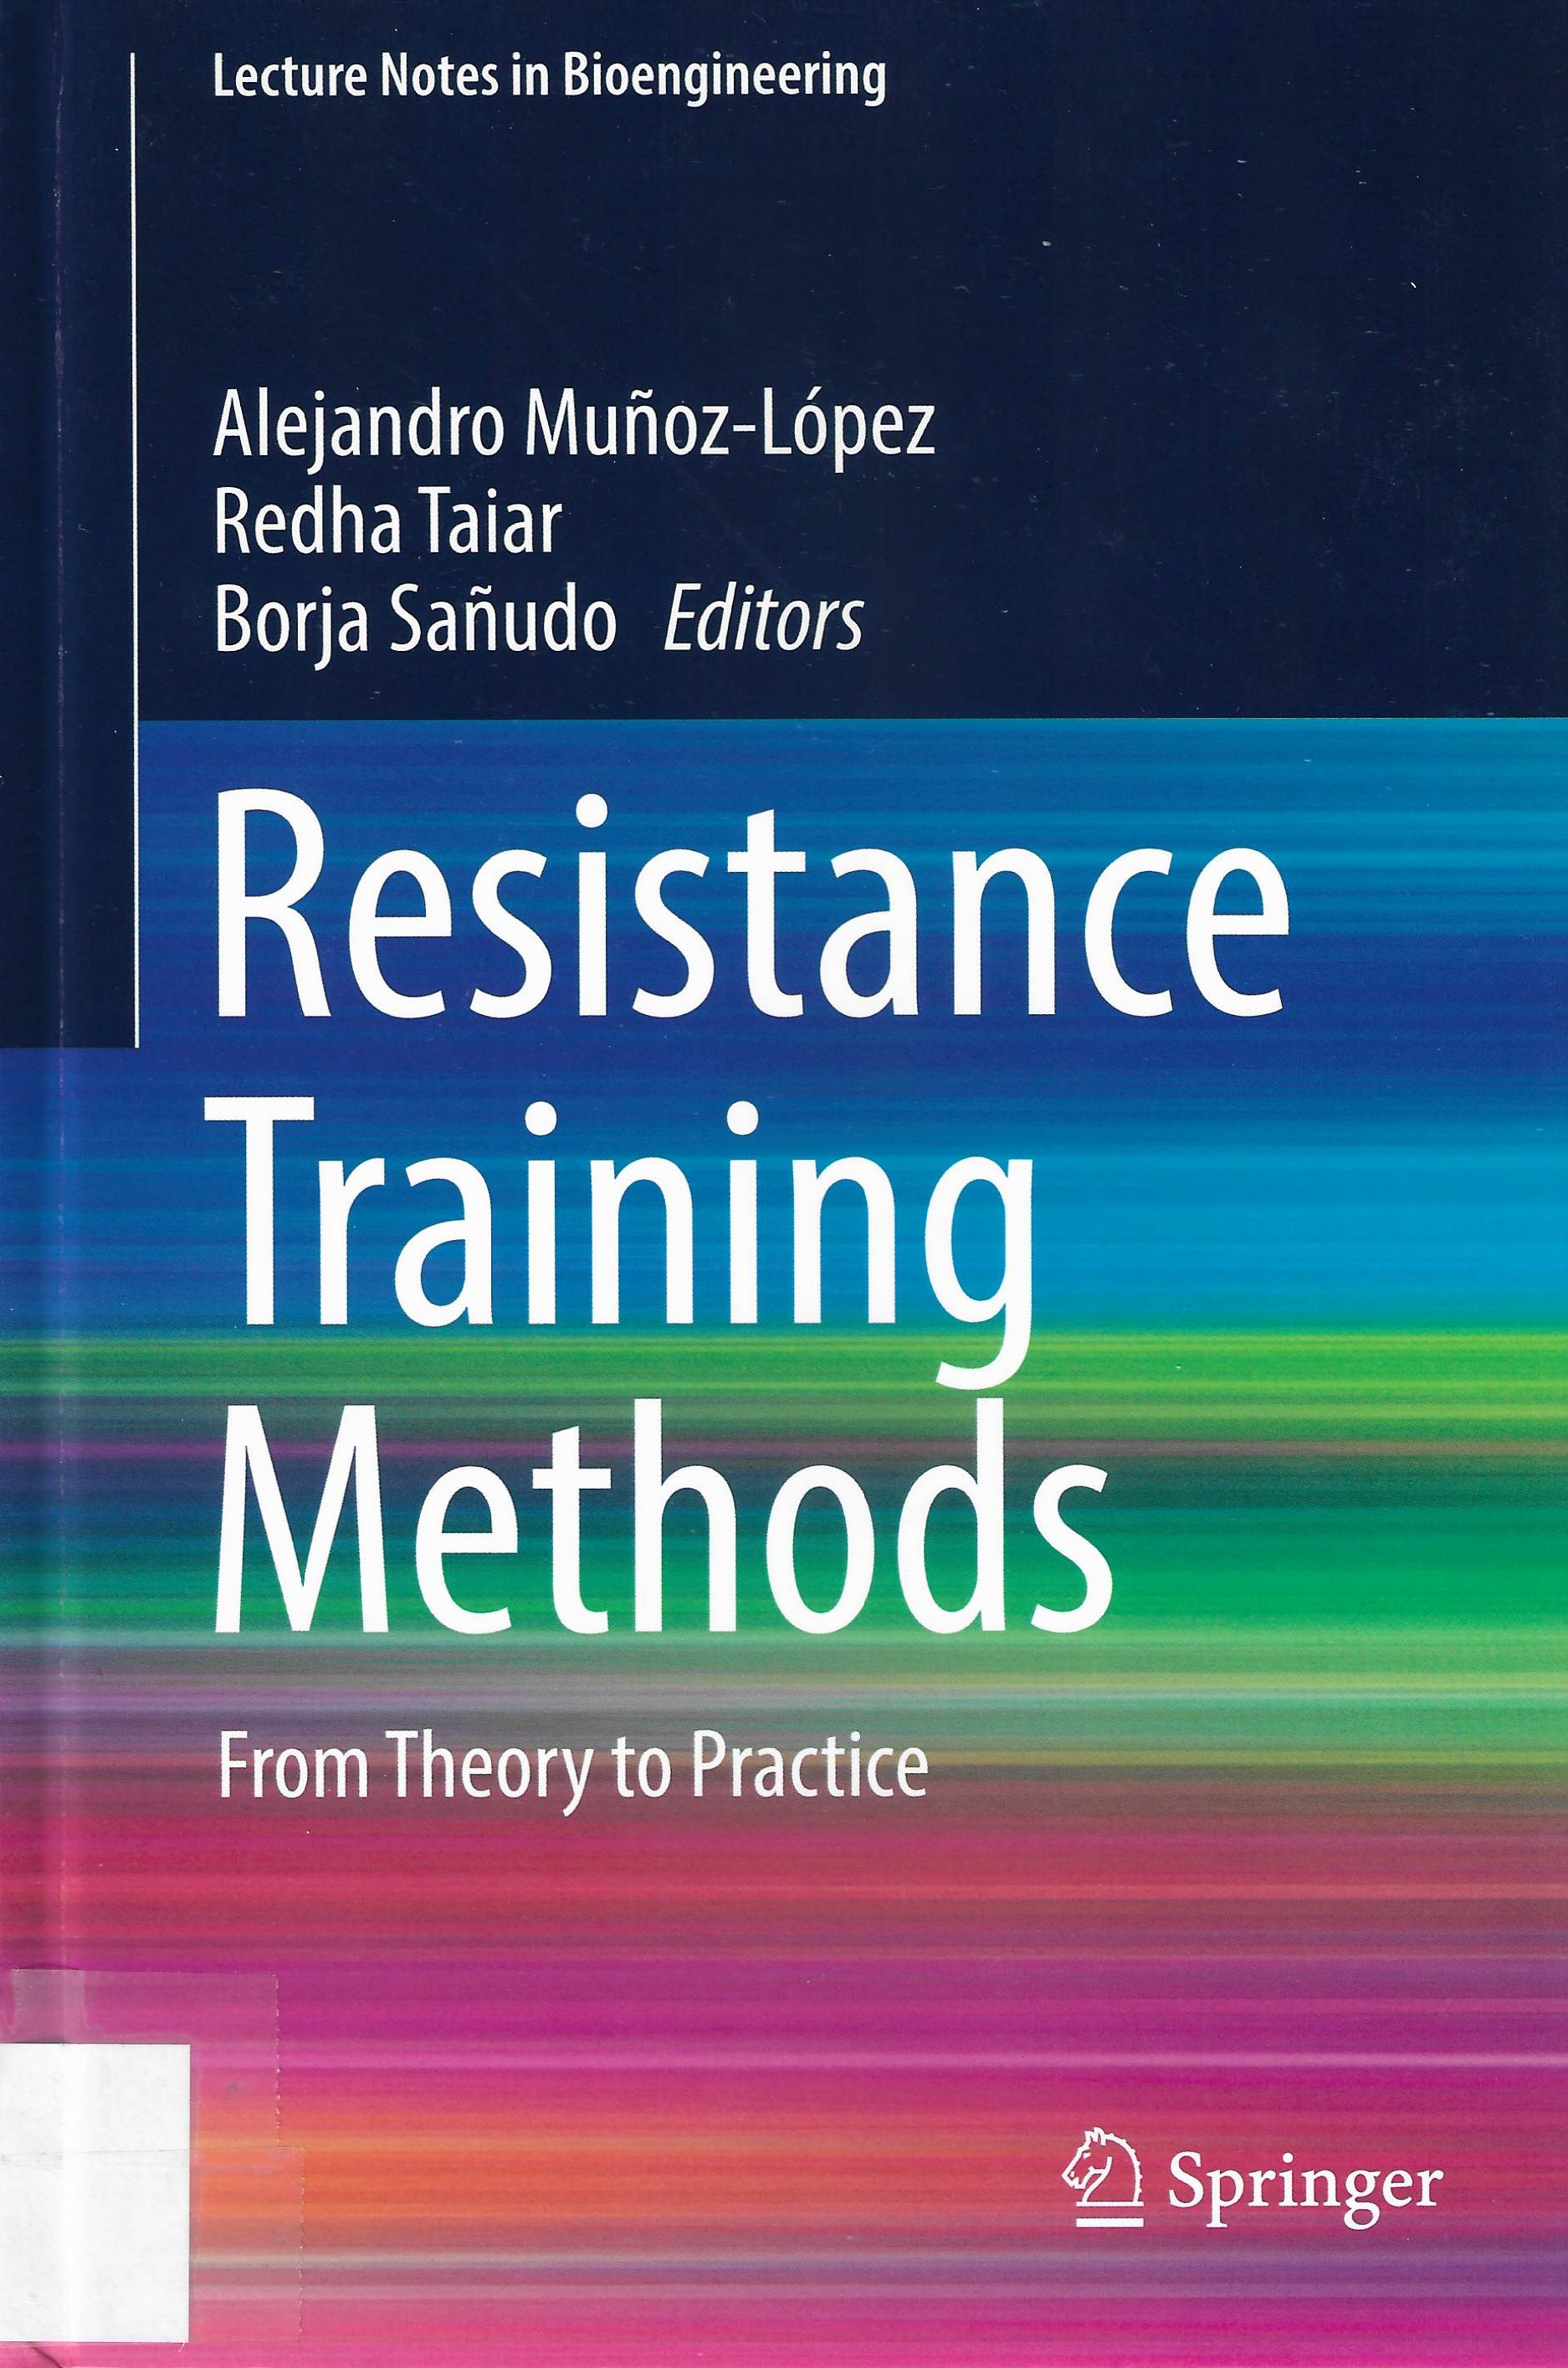 Imagen de portada del libro Resistance Training Methods: from Theory to Practice